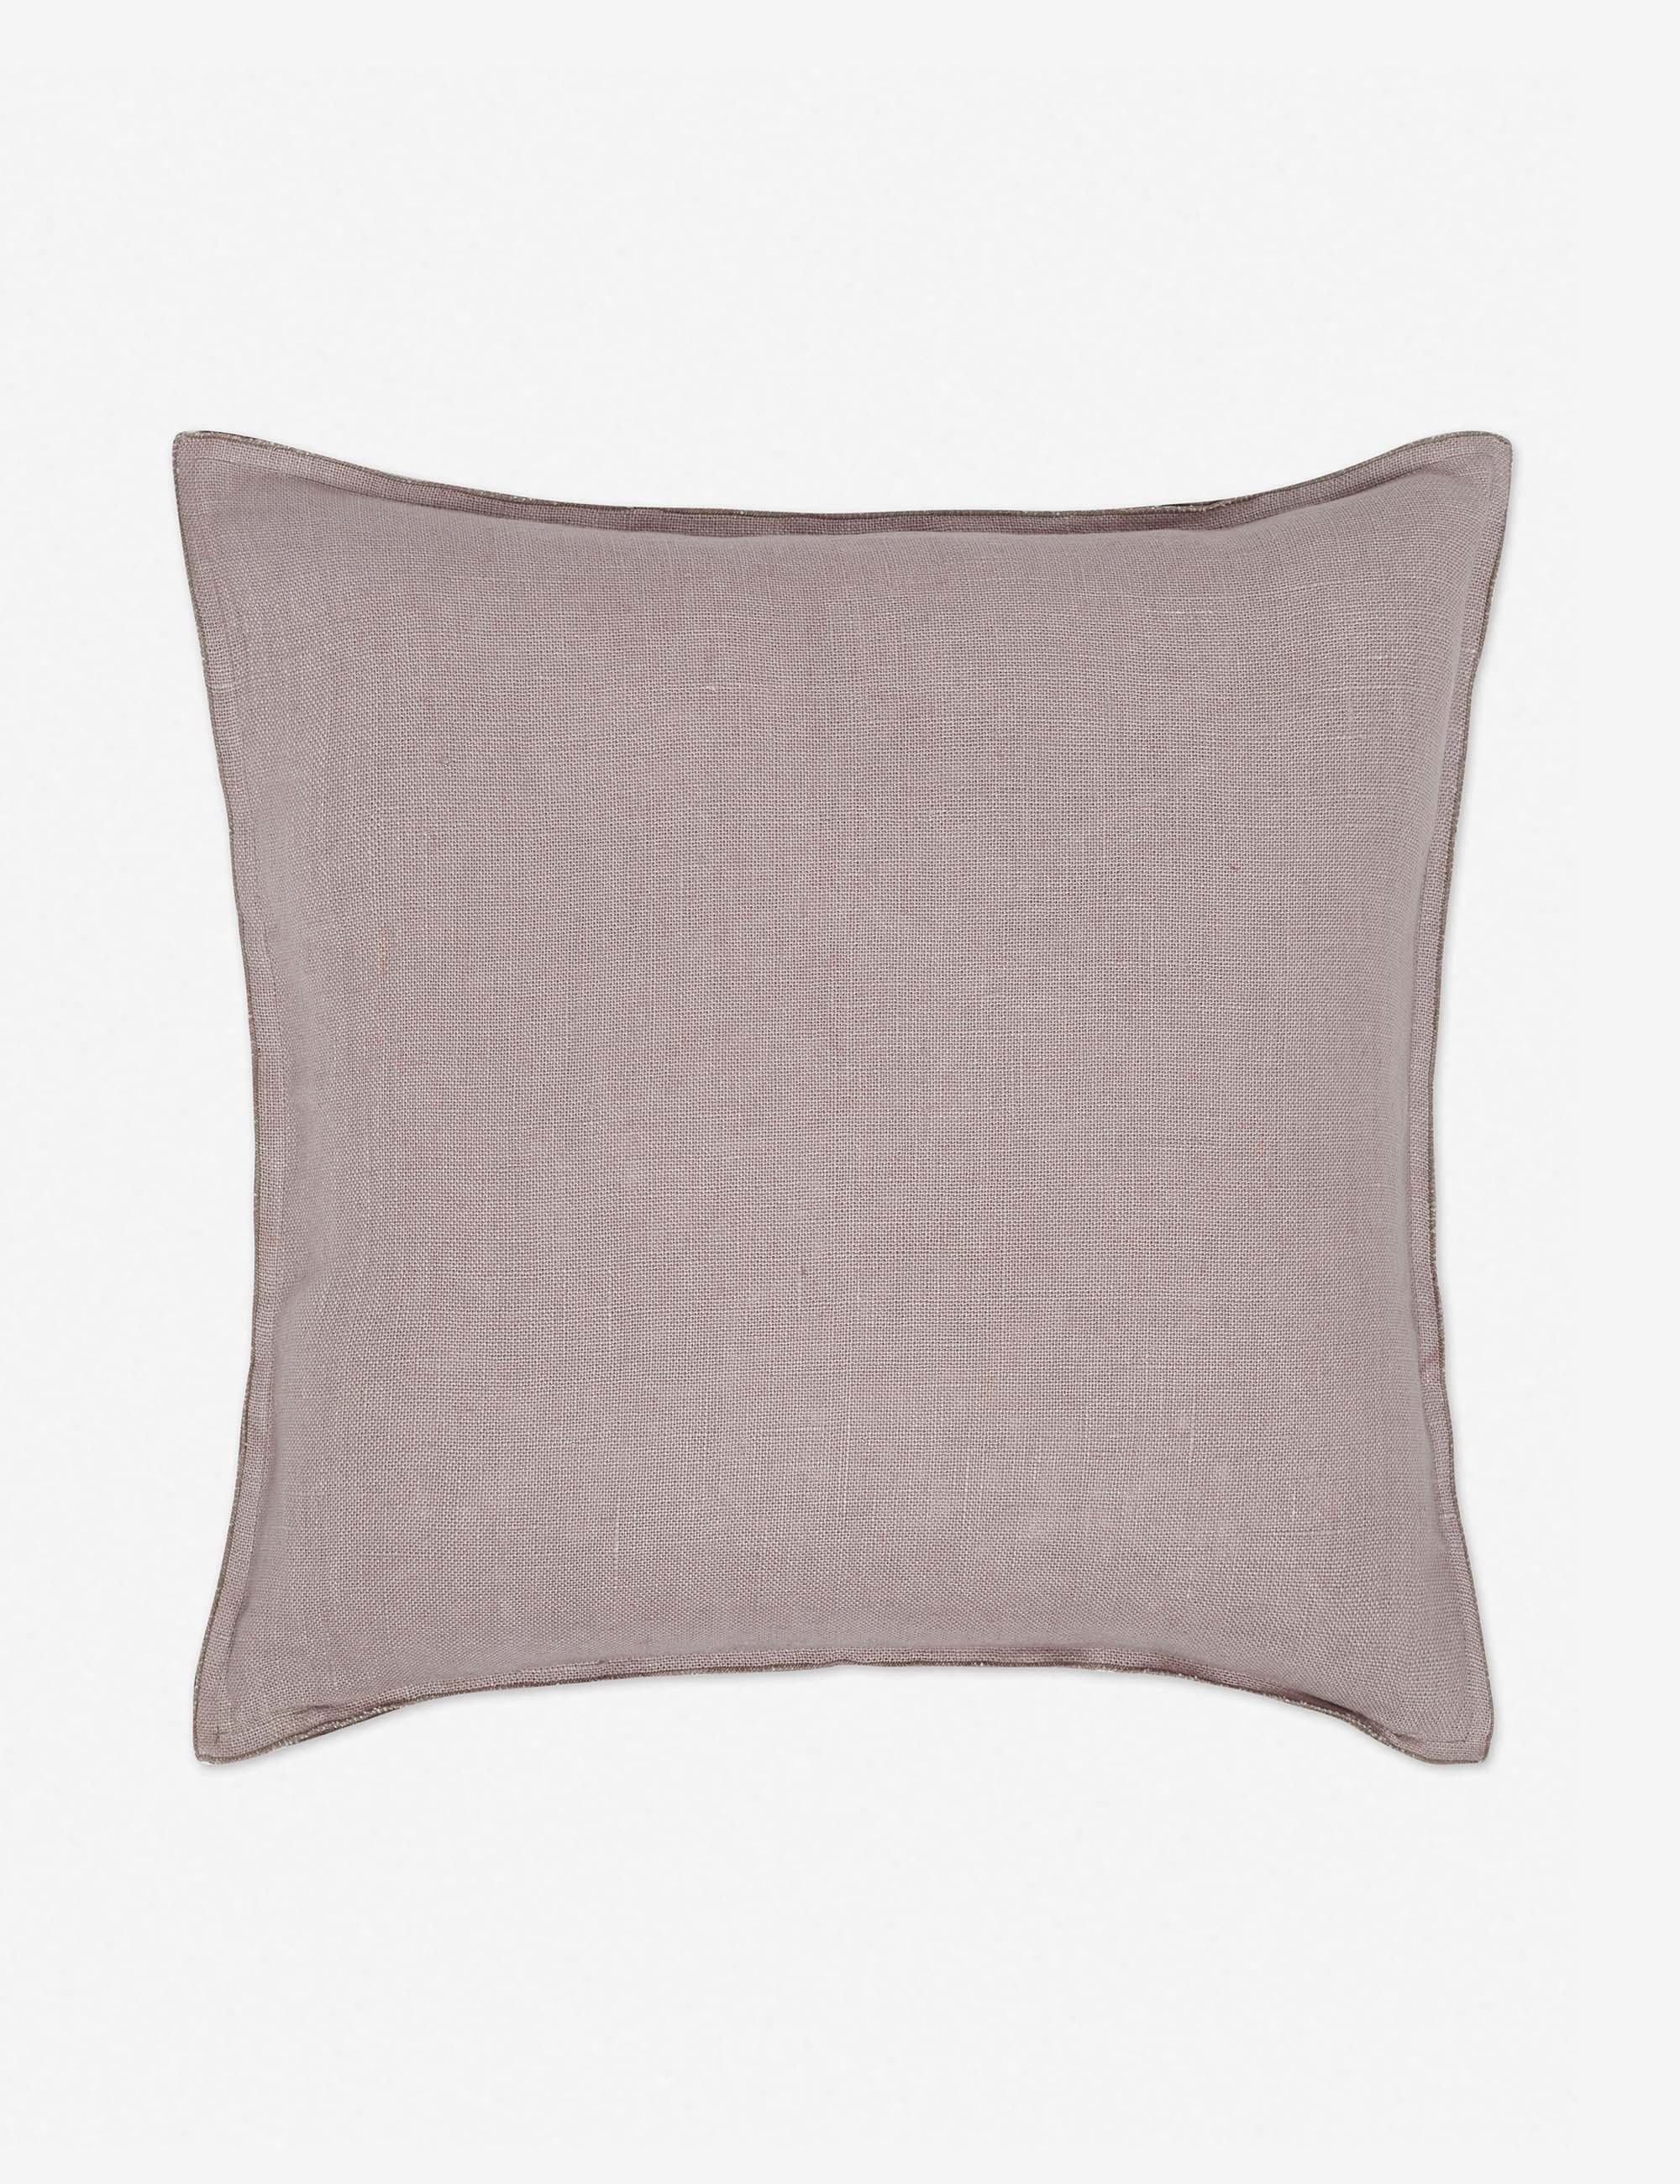 Arlo Linen Pillow, Dark Natural - Image 2